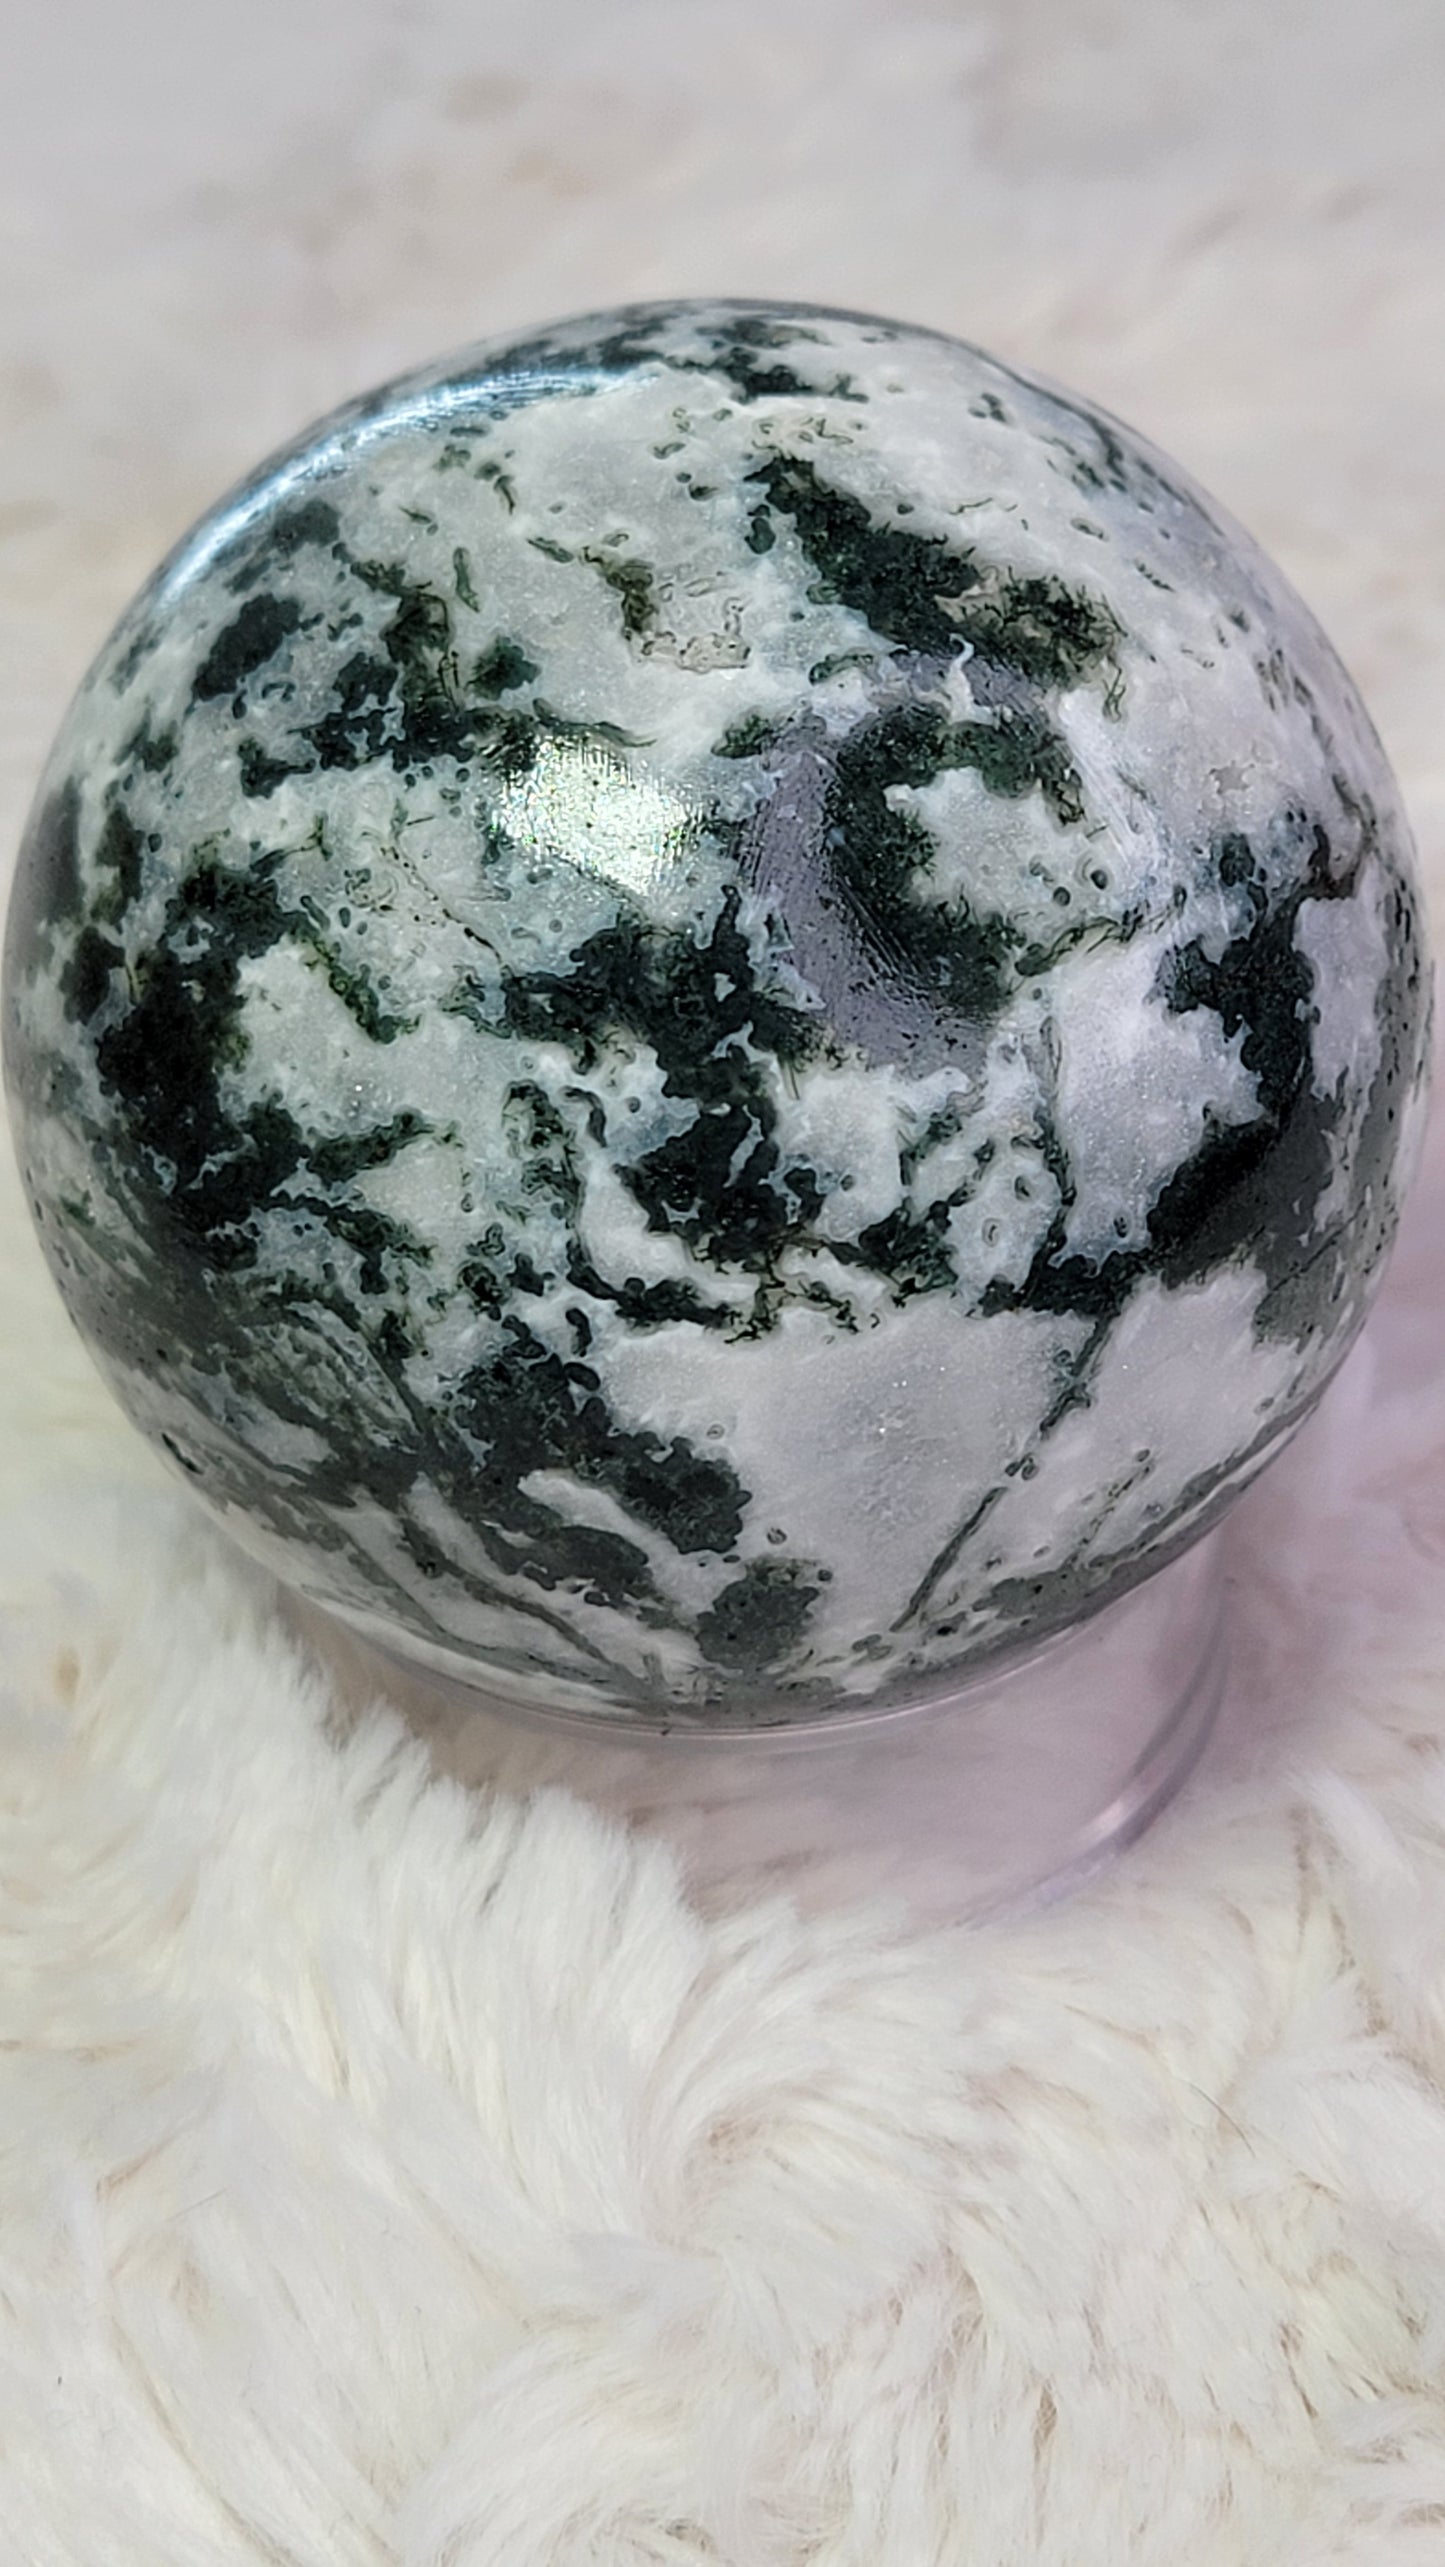 Moss Agate Sphere